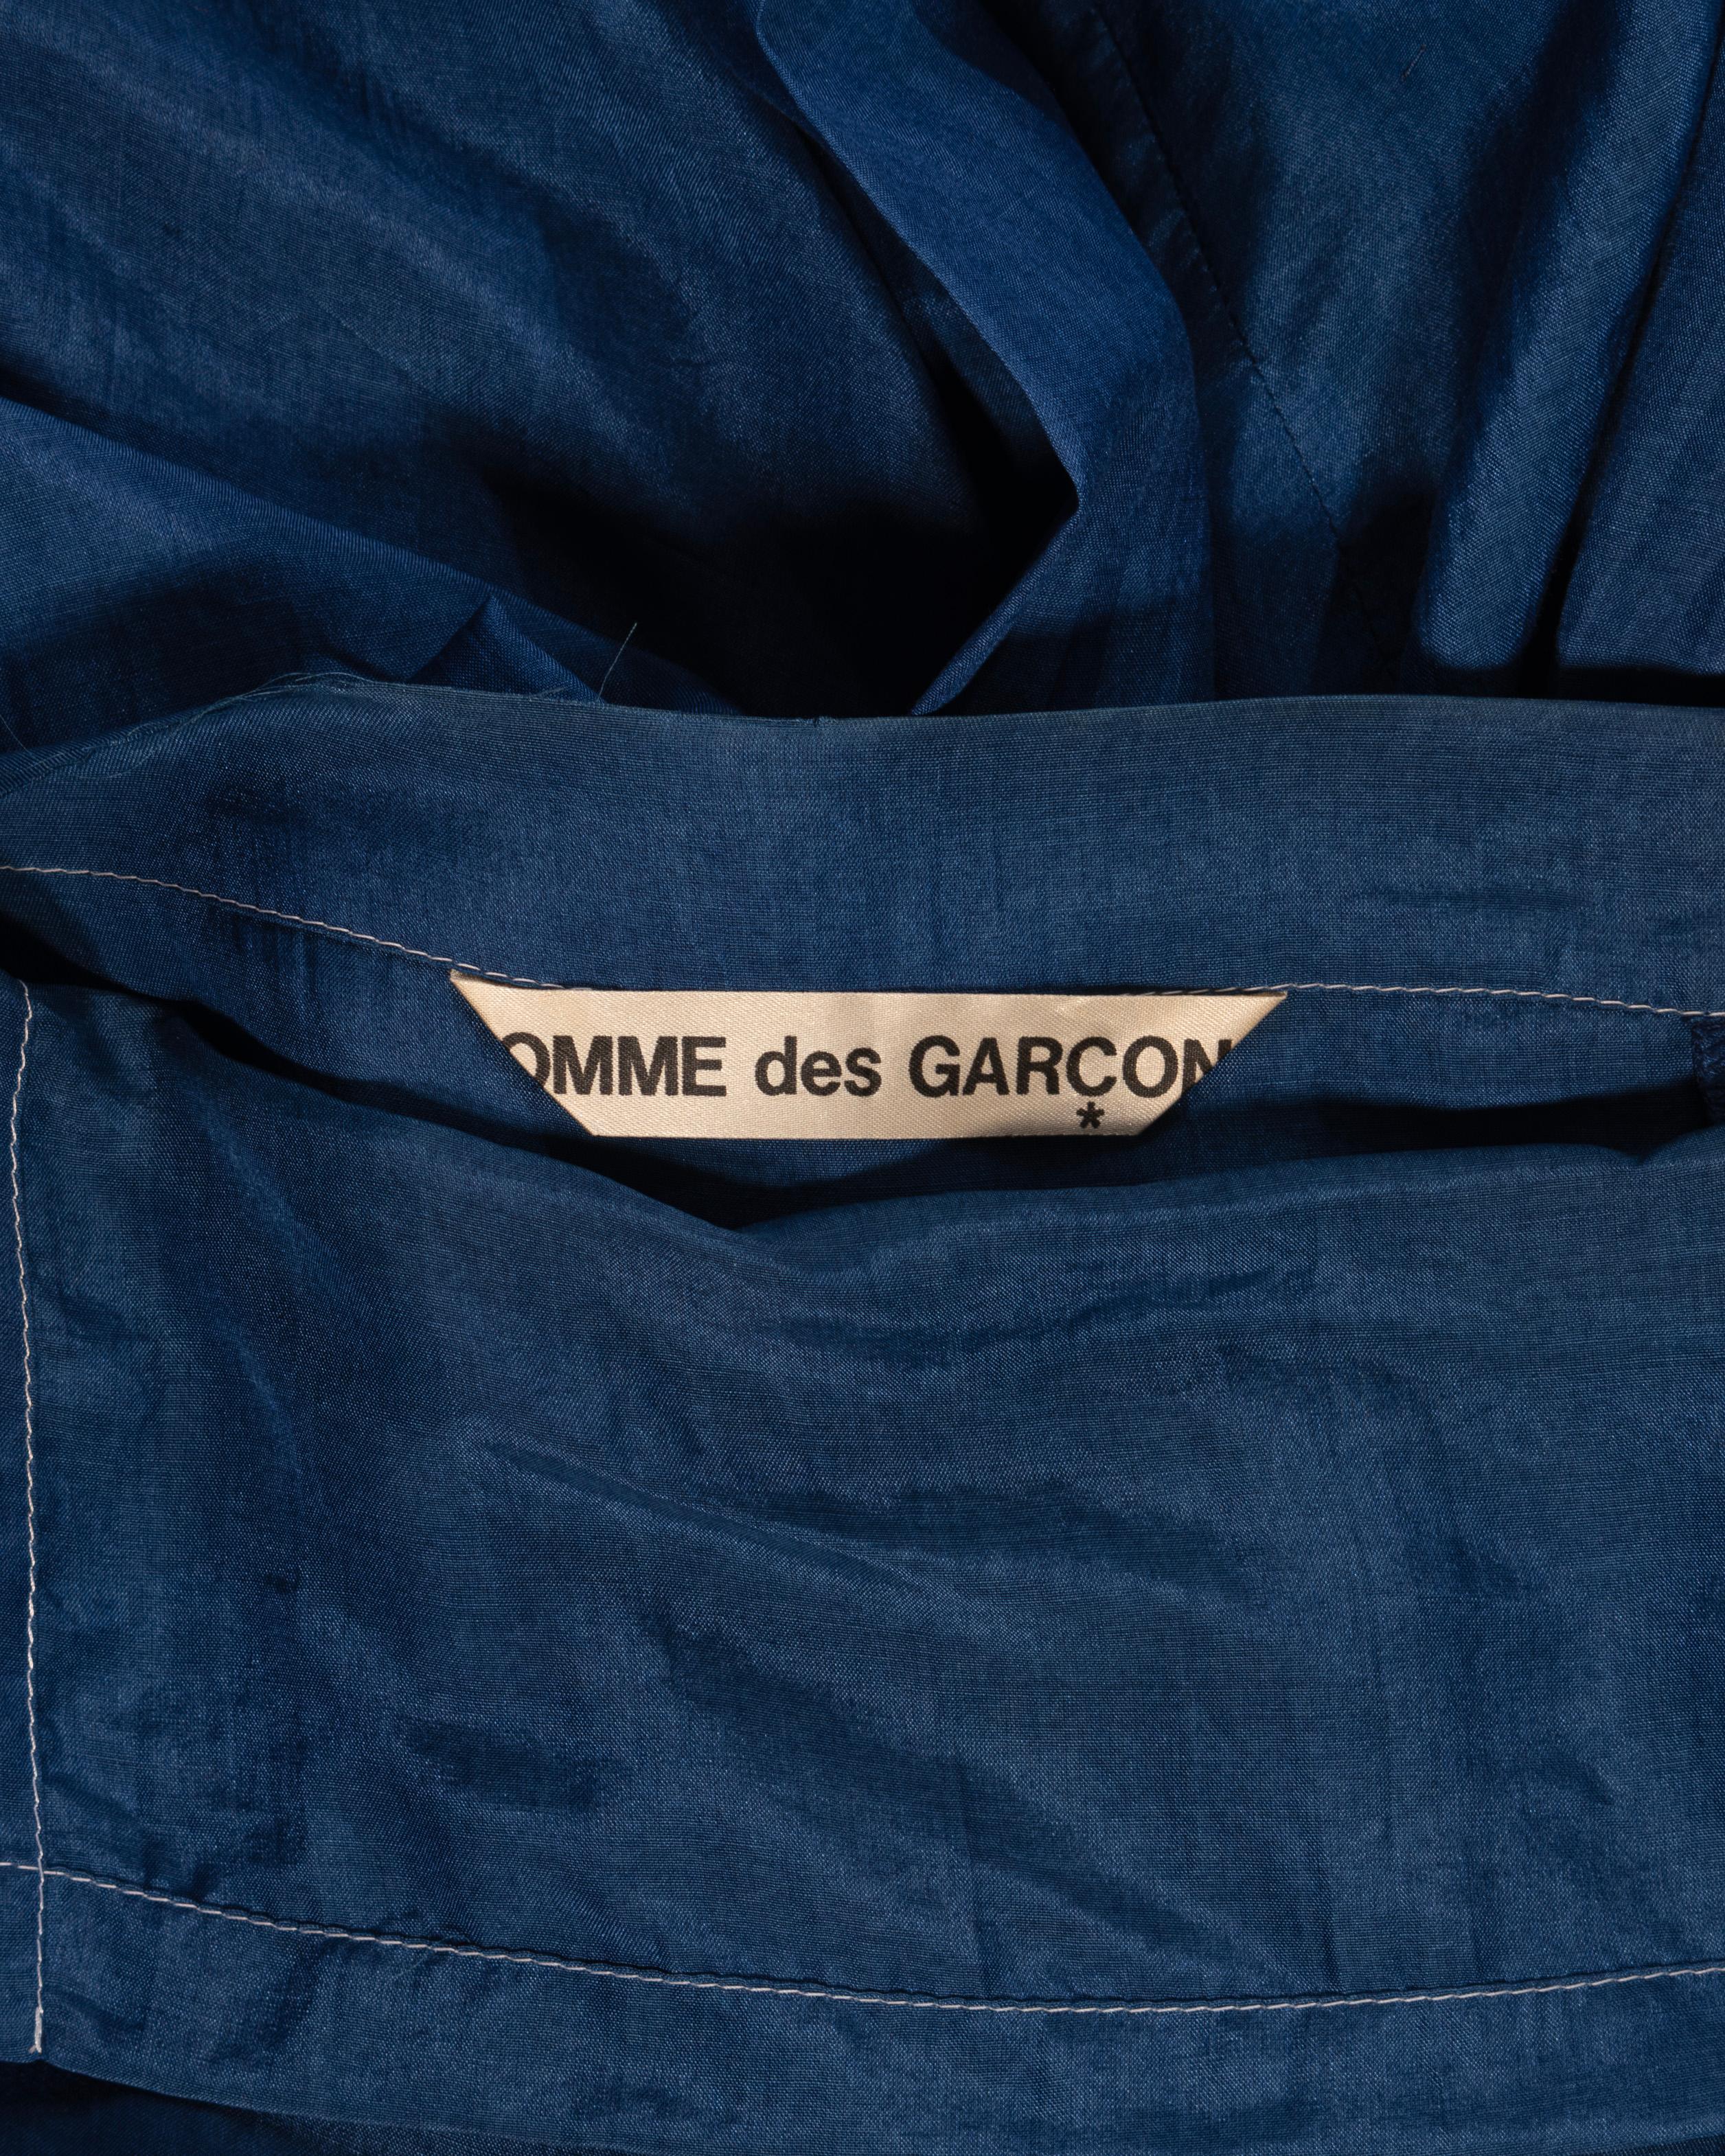 Comme Des Garçons Blue Silk and Rayon Draped Dress, FW 1984 9